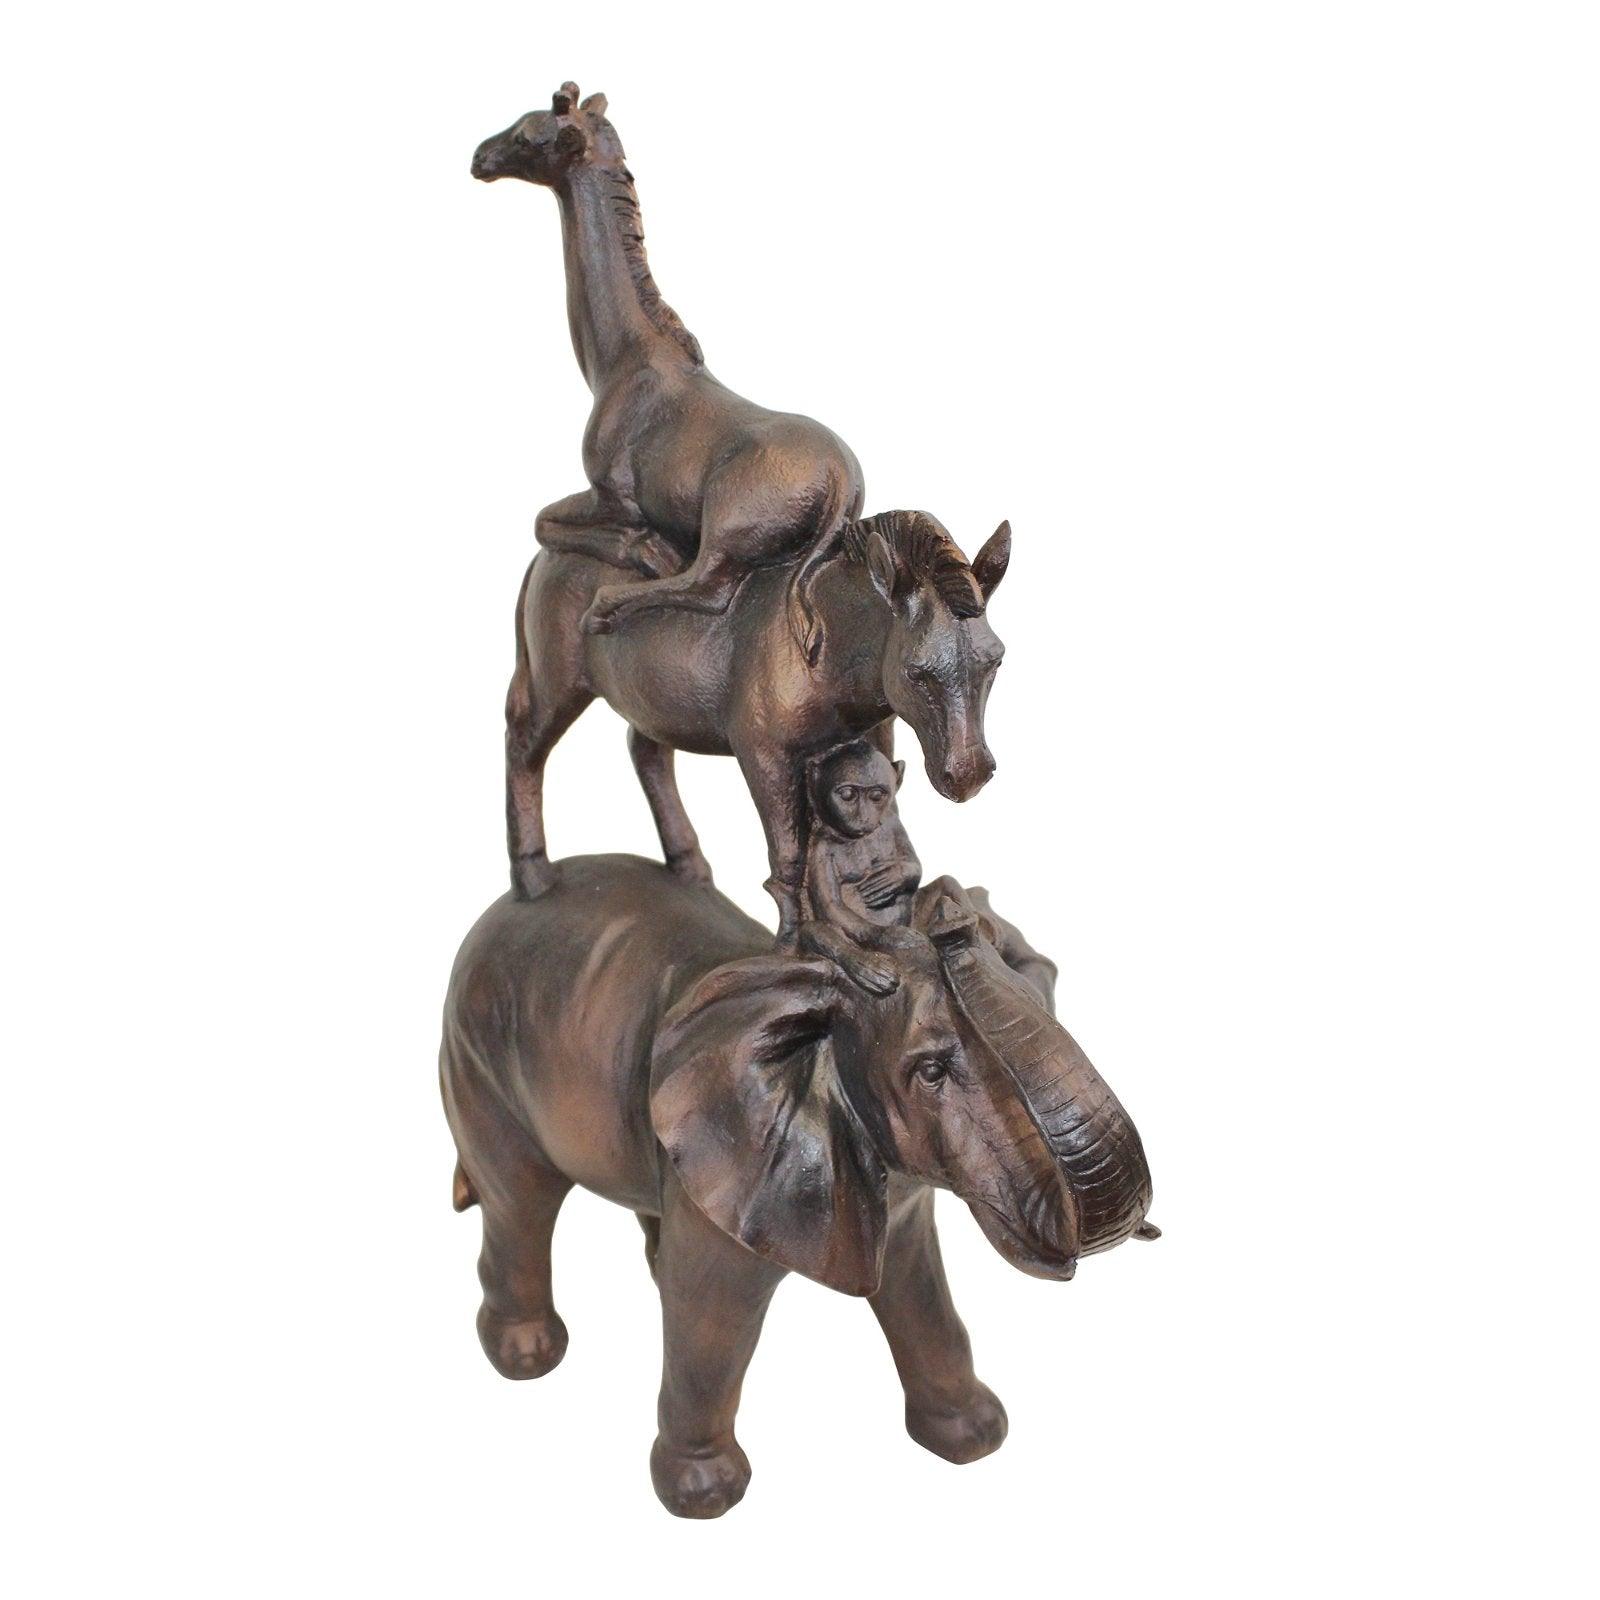 Bronze Effect Stacking Animals Ornament - £61.99 - Animals 